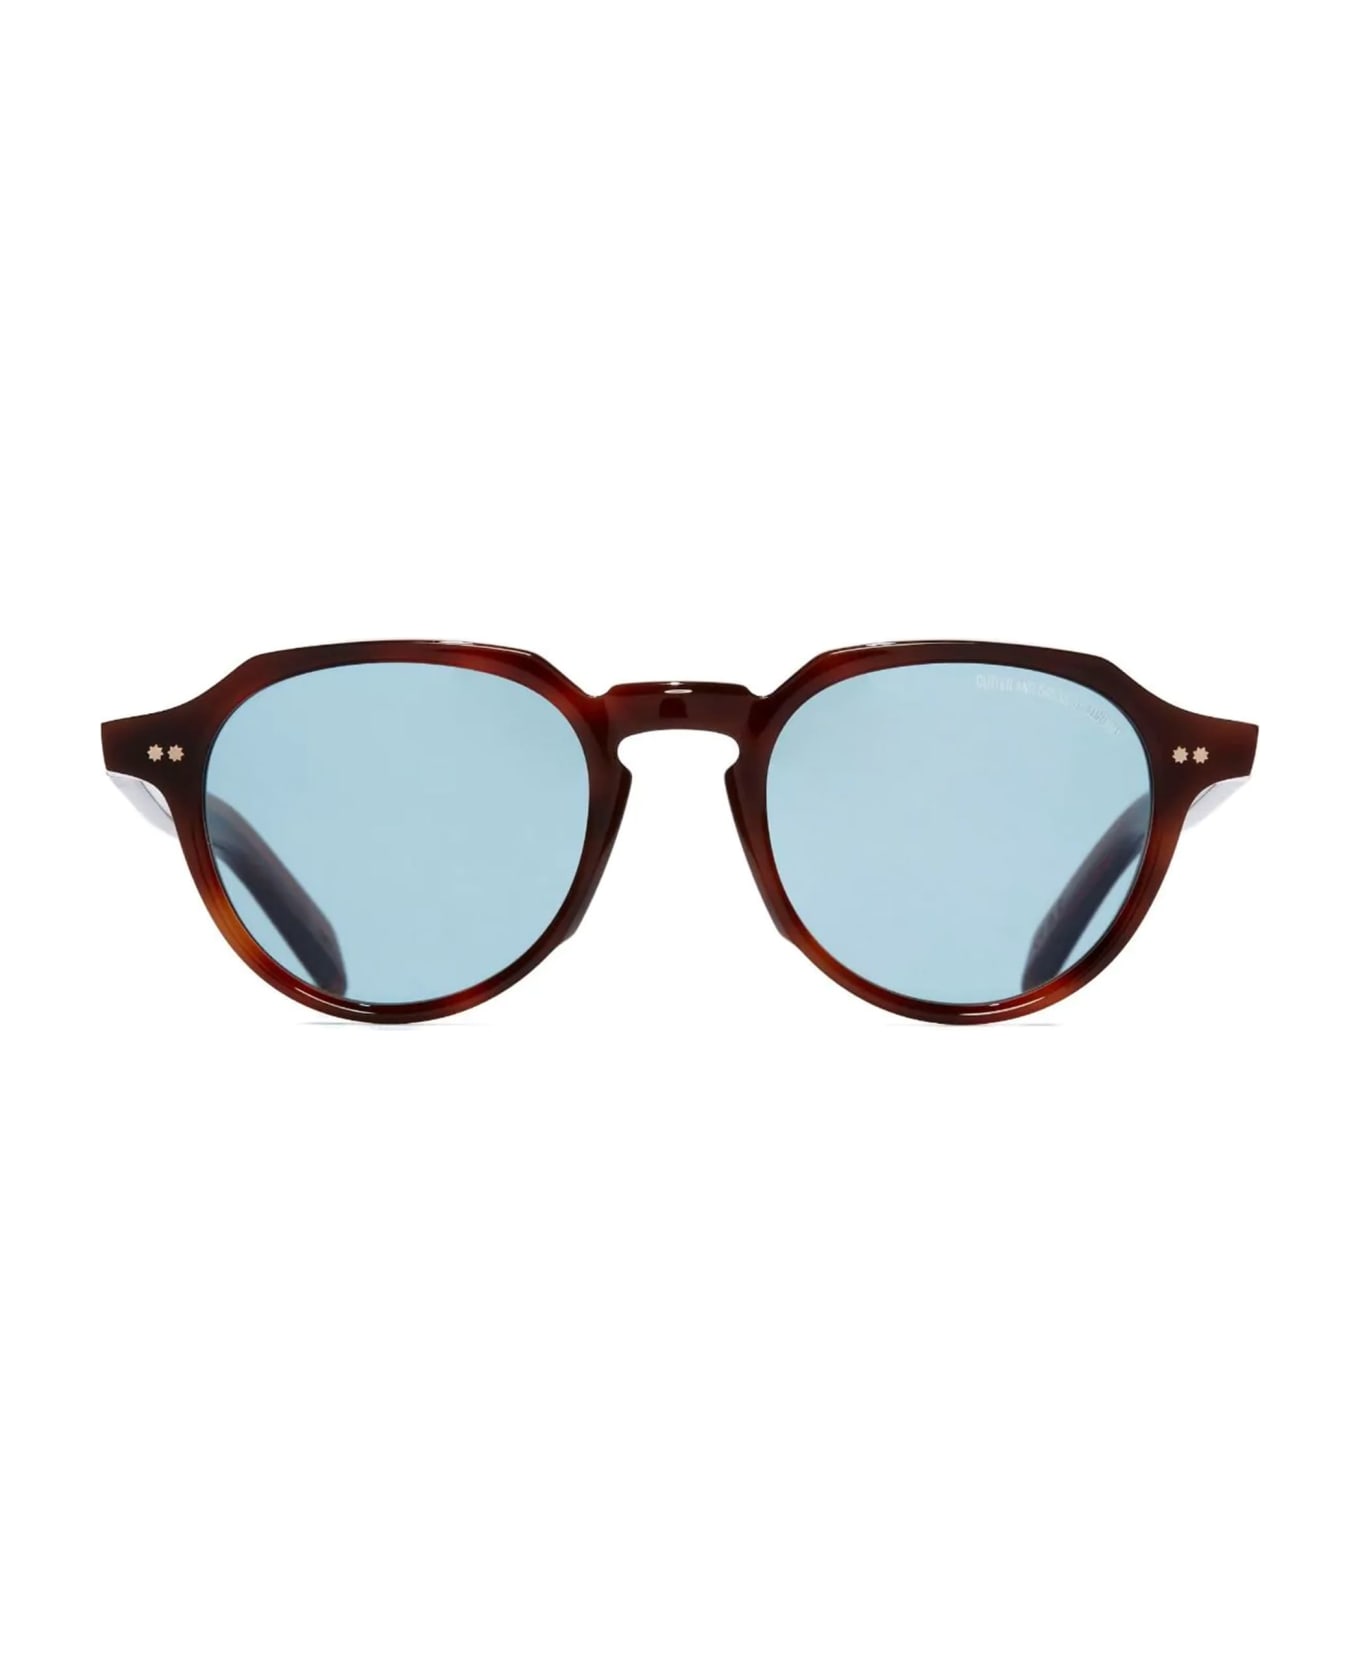 Cutler and Gross Gr06 / Vintage Sunburst Sunglasses - brown